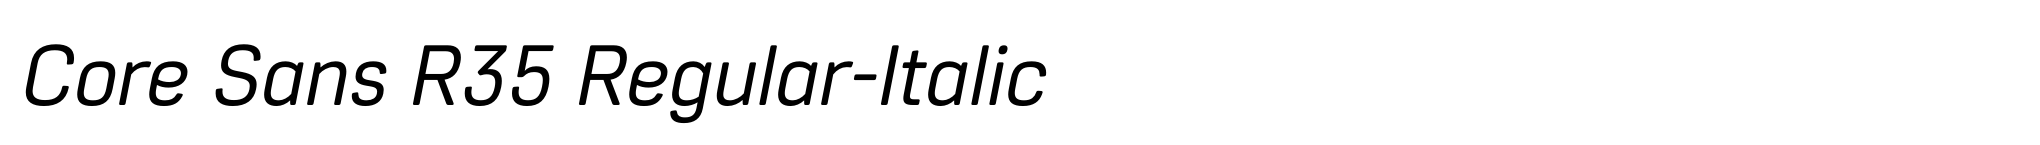 Core Sans R35 Regular-Italic image